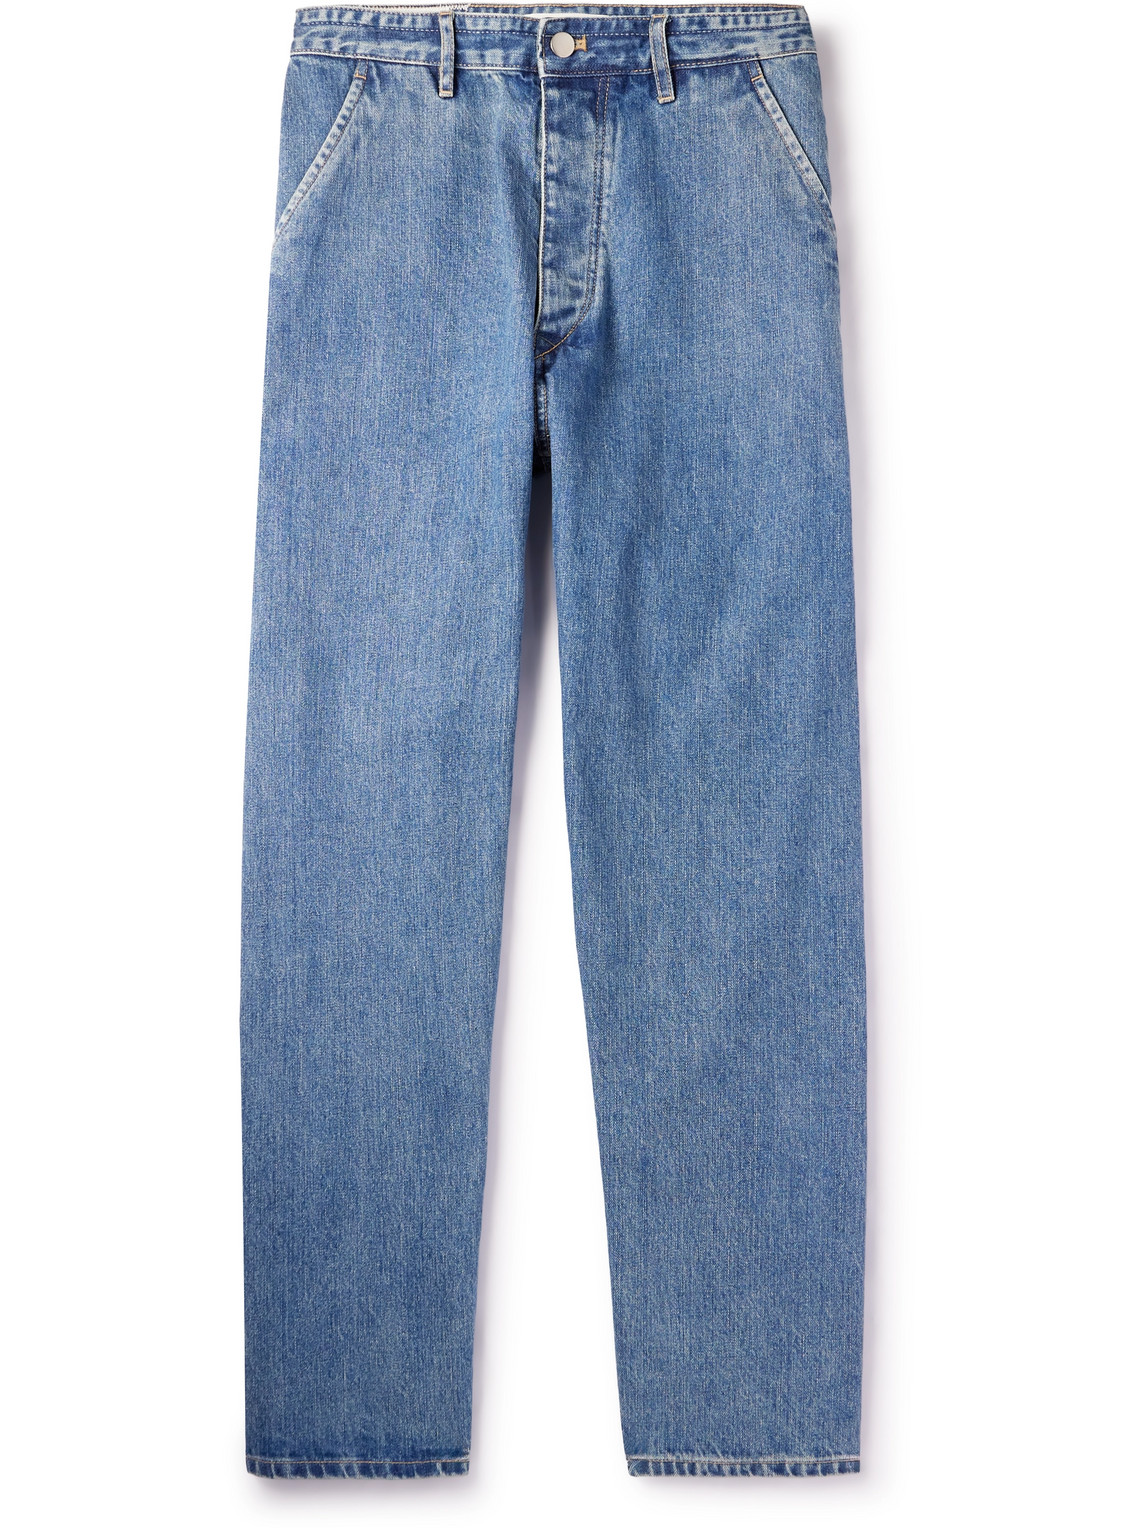 Applied Art Forms DM2-2 Straight-Leg Selvedge Jeans